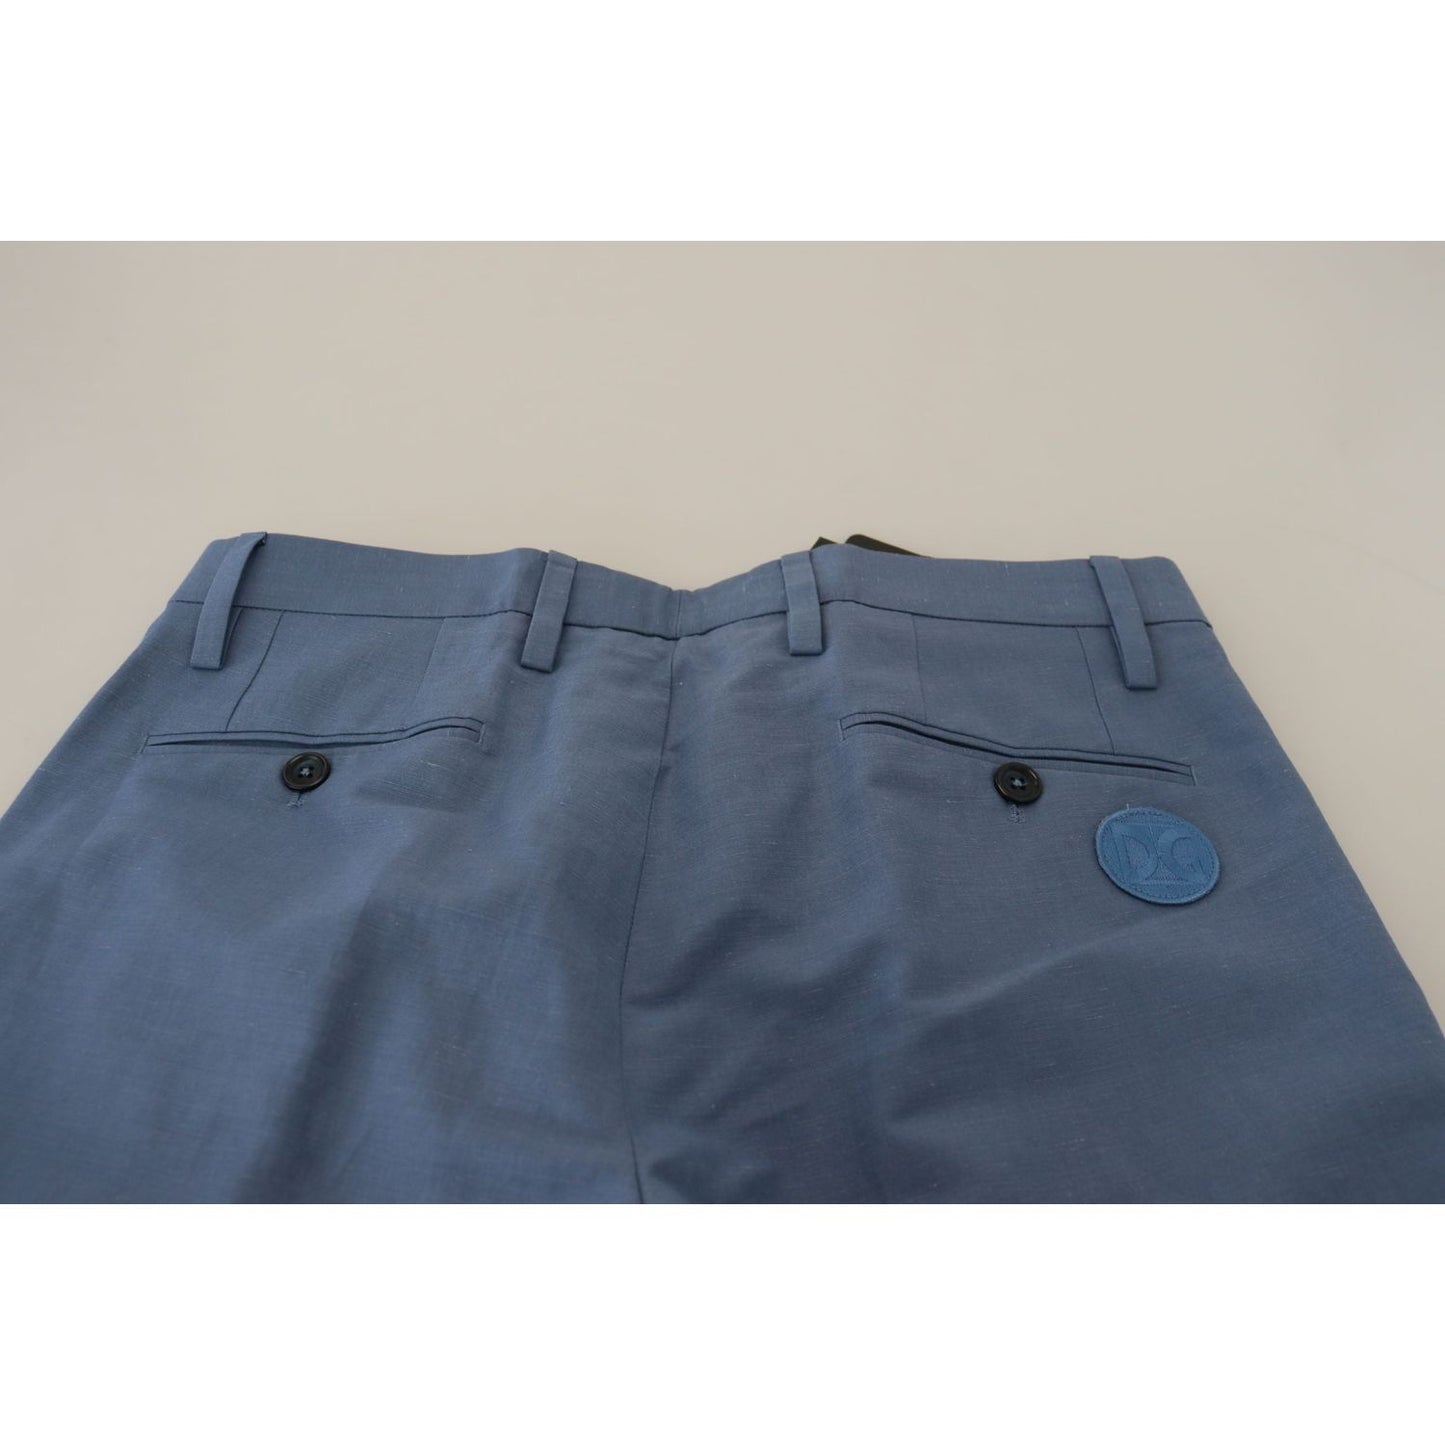 Dolce & Gabbana Elegant Regular Fit Dress Pants in Blue Jeans & Pants blue-linen-cotton-slim-trousers-chinos-pants-1